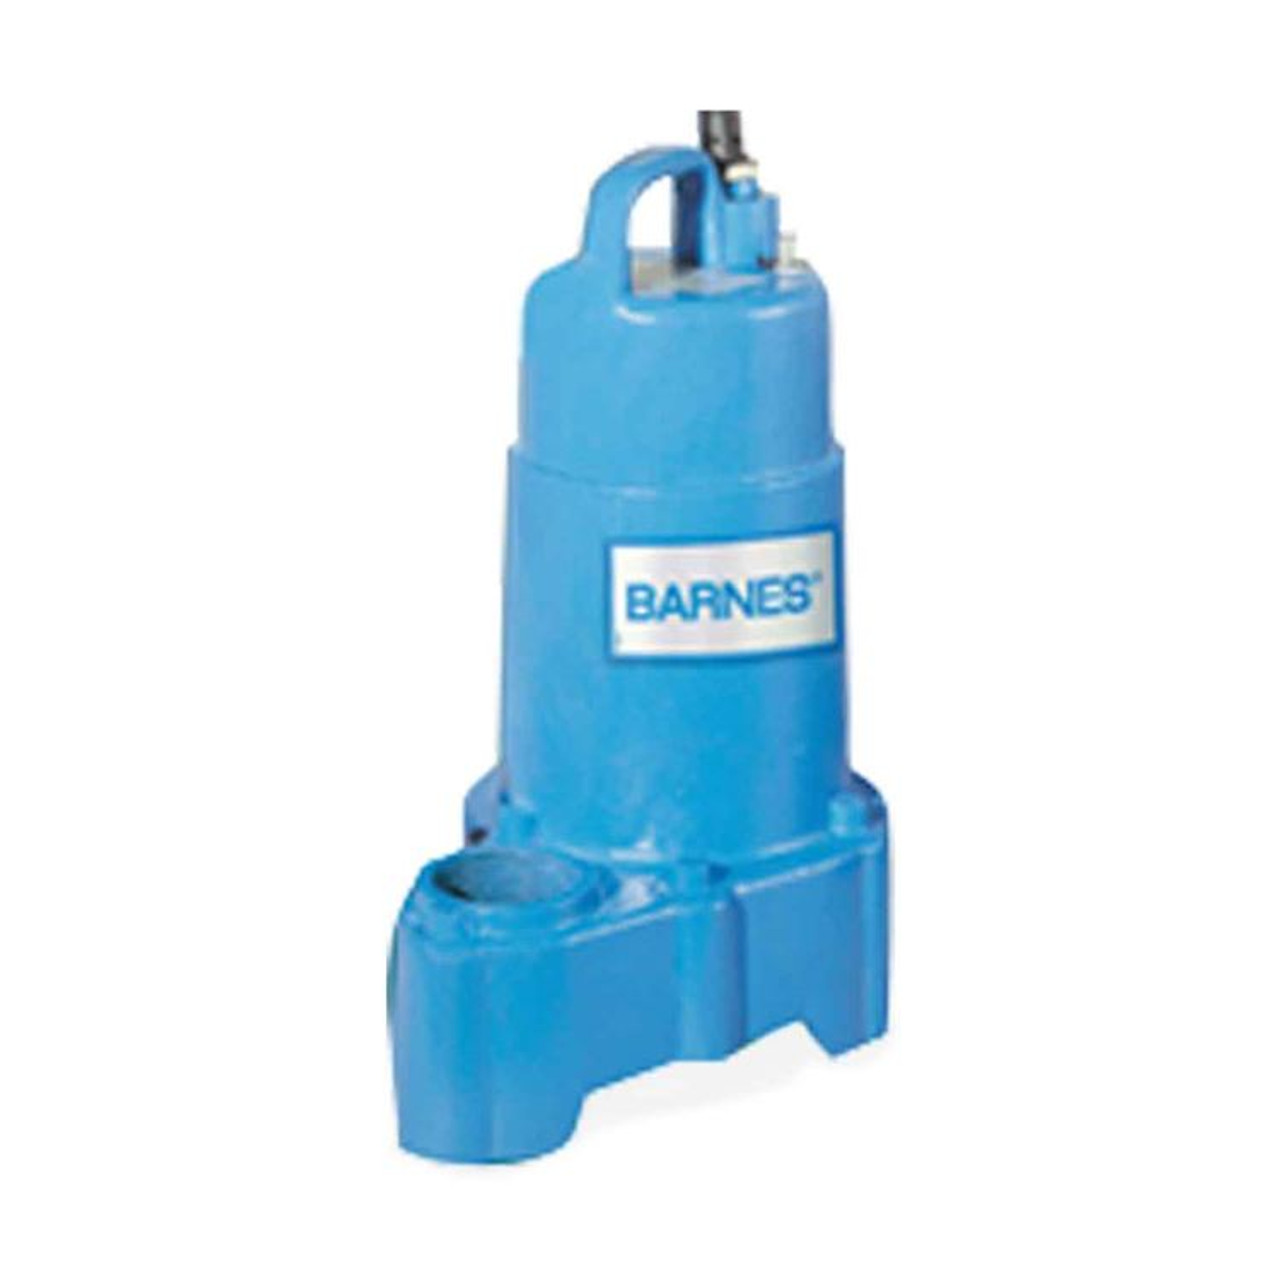 Barnes SP75AX Submersible Effluent Pump 0.75 HP 120V 1PH 20' Cord Automatic